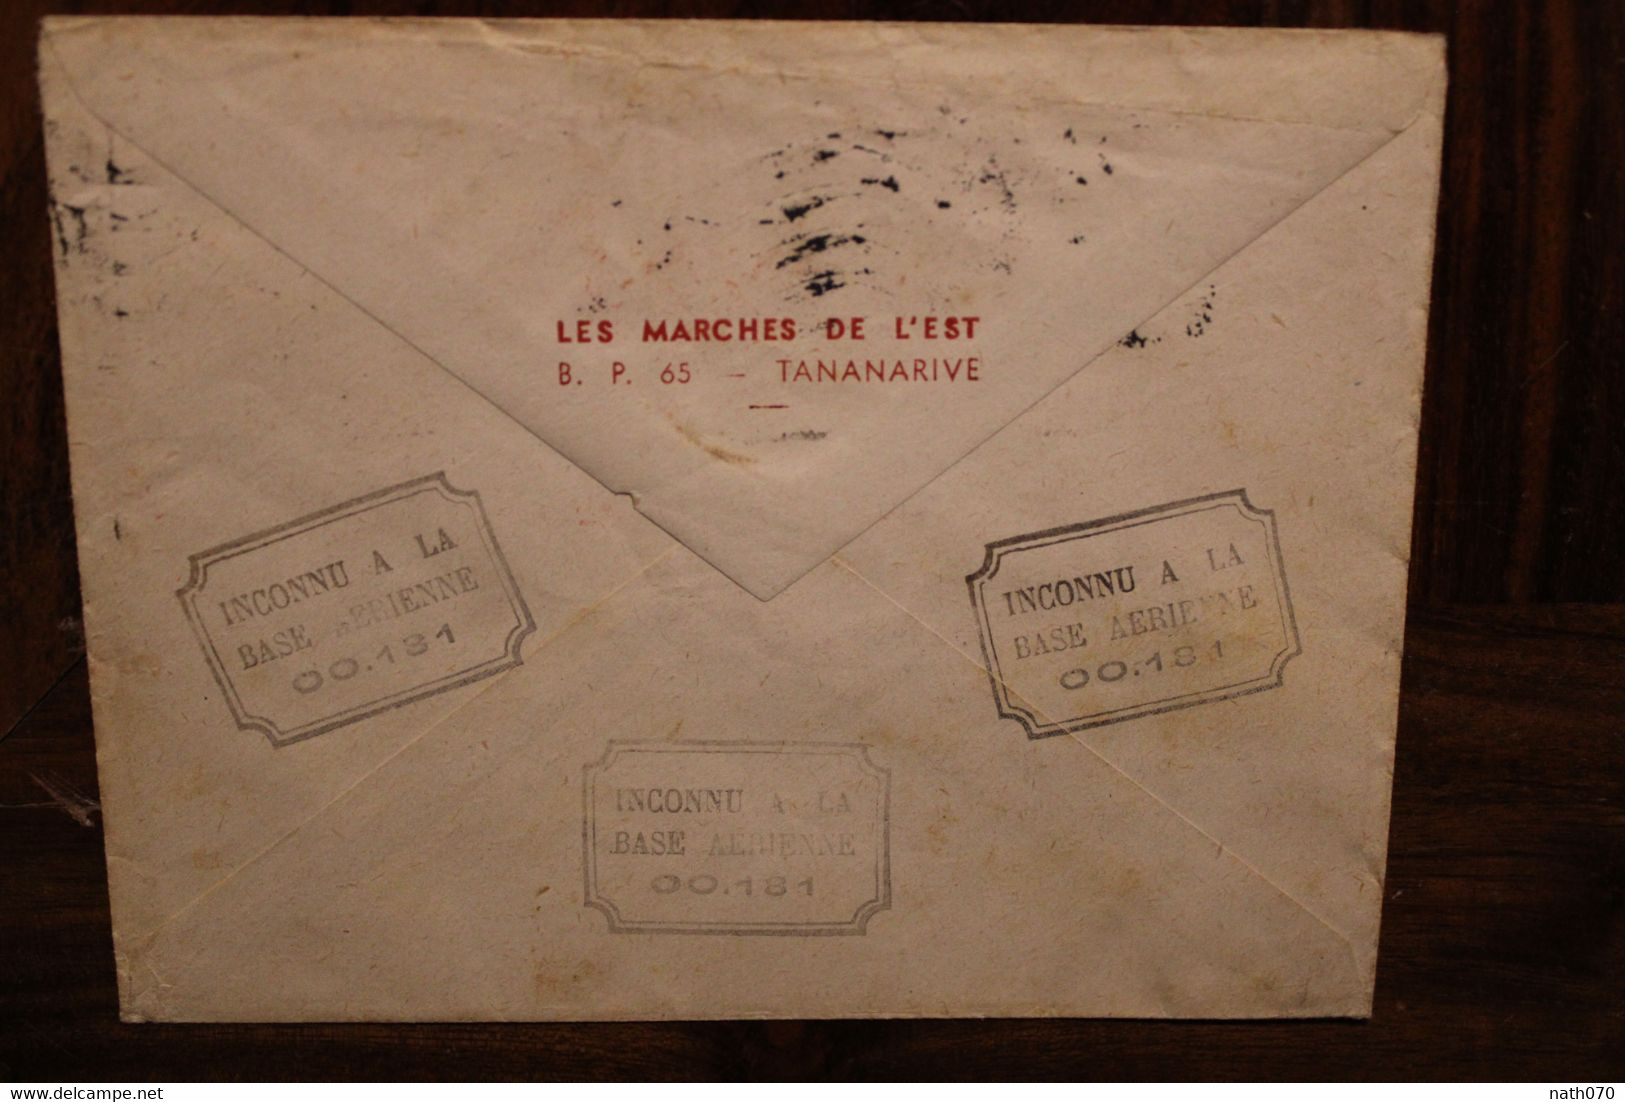 1957 Madagascar France Inconnu à La Base Aerienne Timbre Seul Cover Air Mail Flamme Radio Naviguant Militaire Ivalo - Covers & Documents